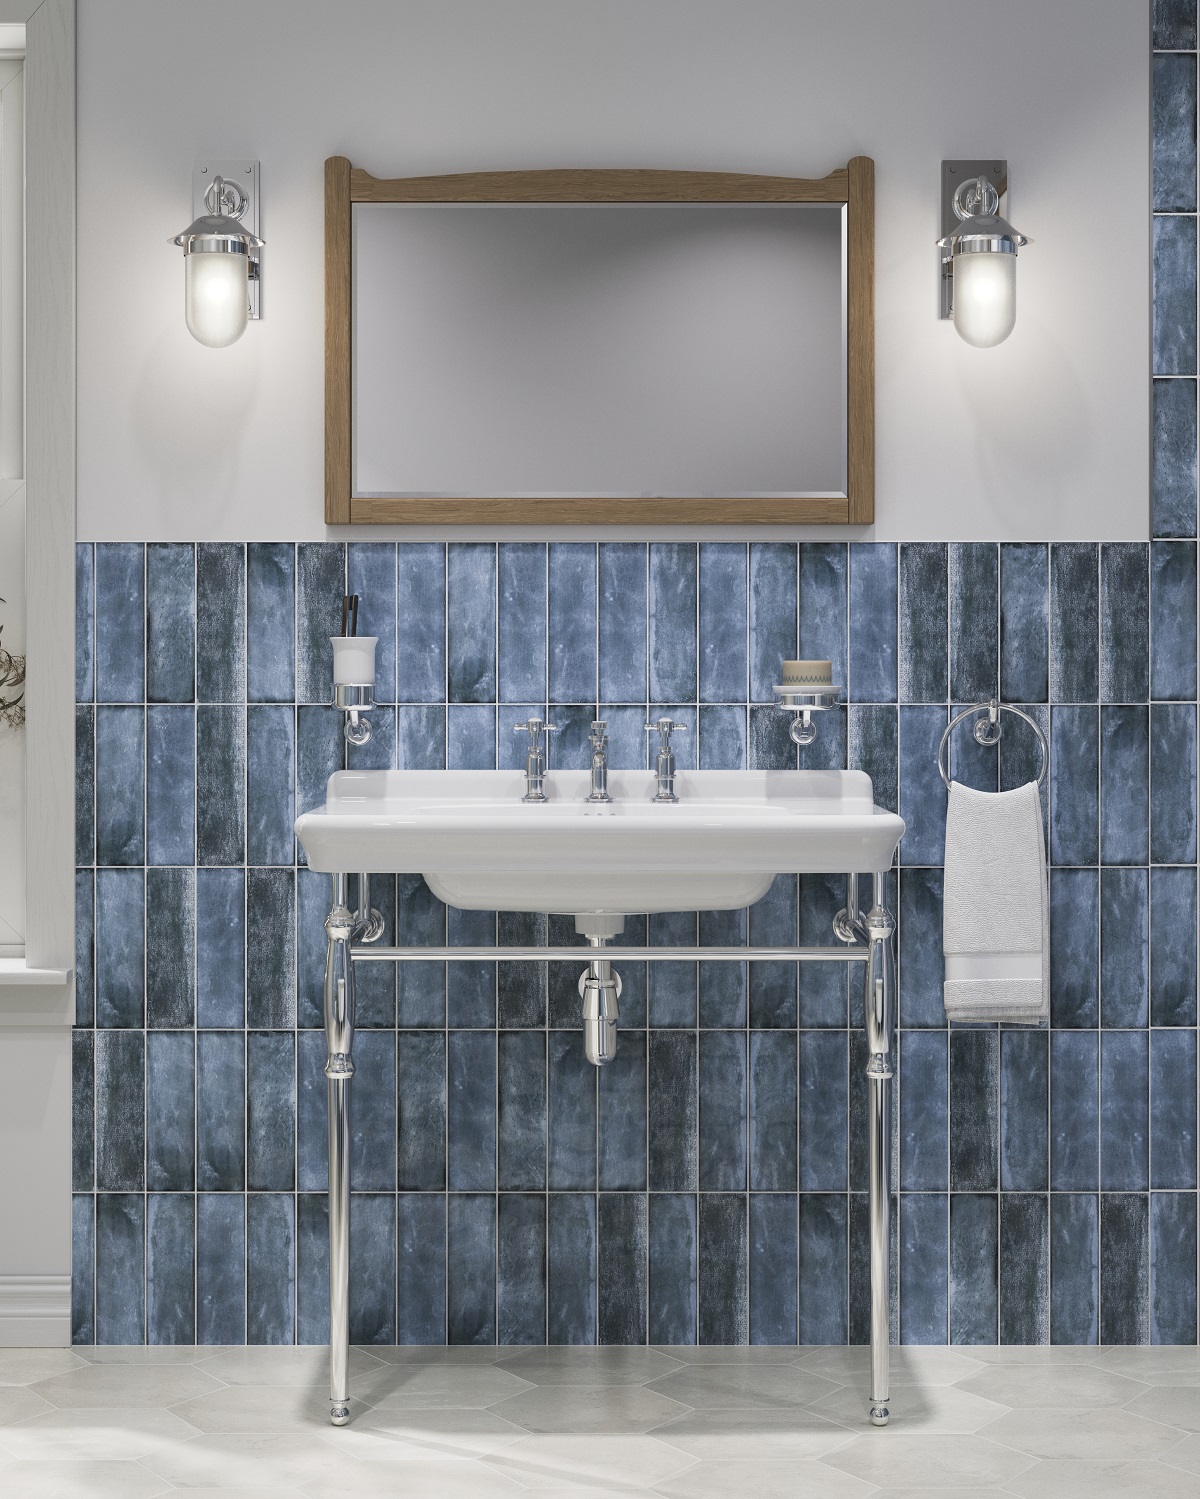 chrome art deco style bathroom fittings from Burlington against blue tiles